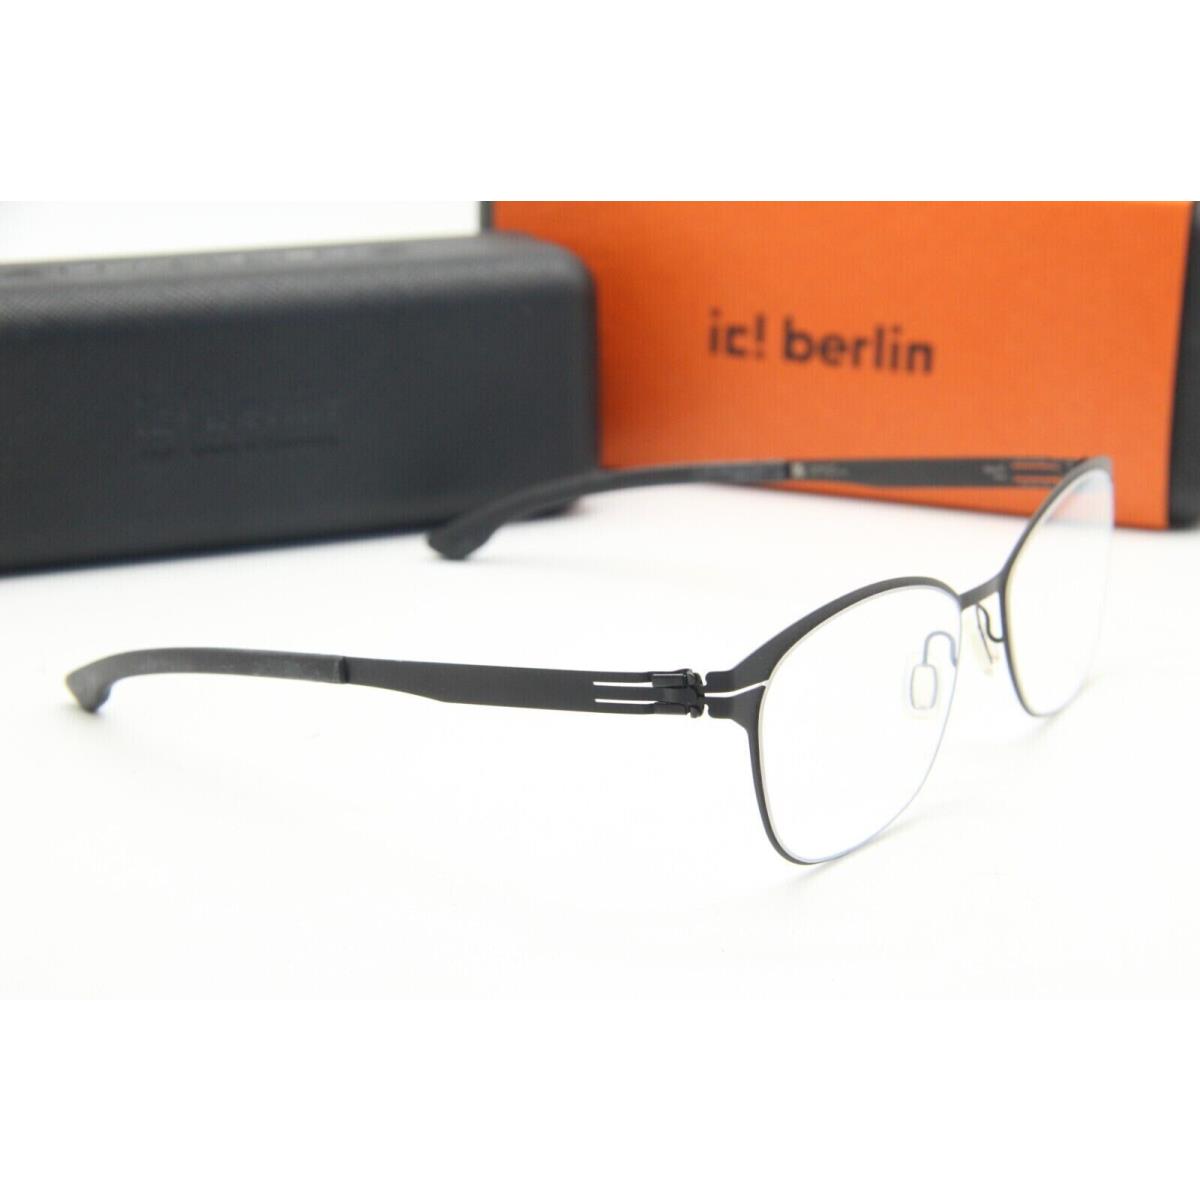 ic! berlin eyeglasses MODEL SUE - Black Frame, Clear Lens